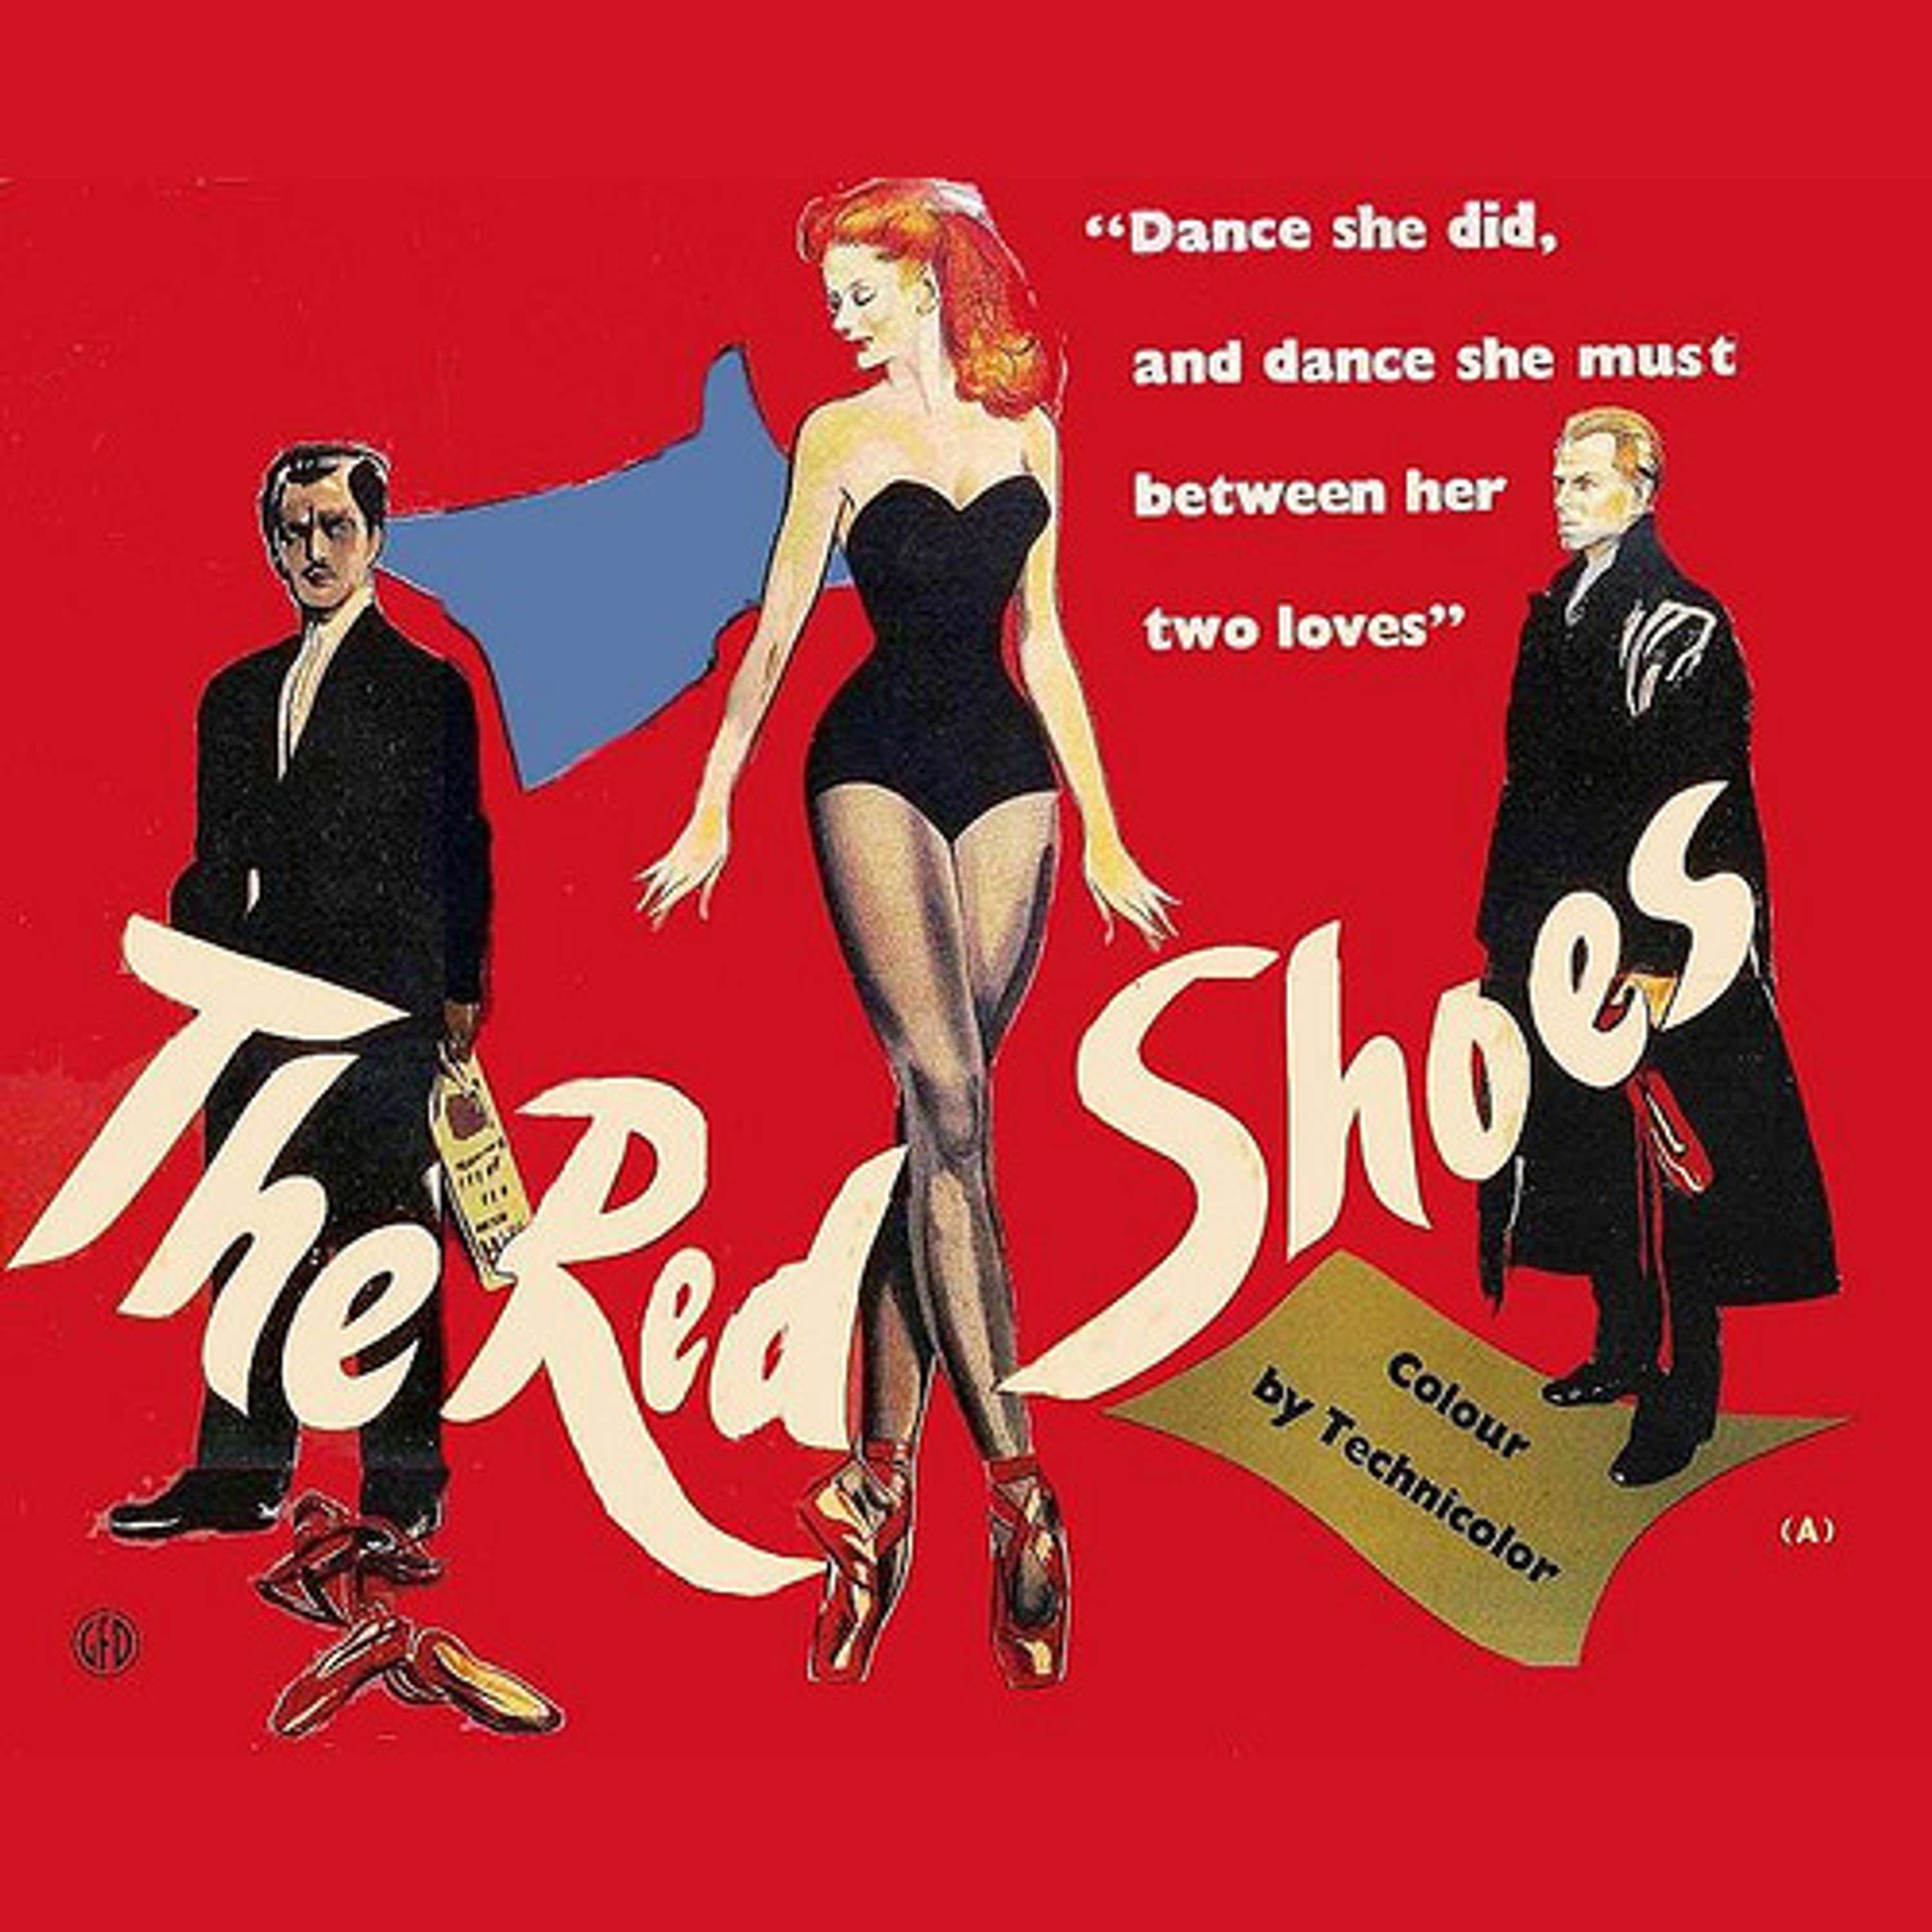 Dancin перевод. Красные башмачки. The Red Shoes 1948. Афиша красные башмачки. Poster Classic Shoe.